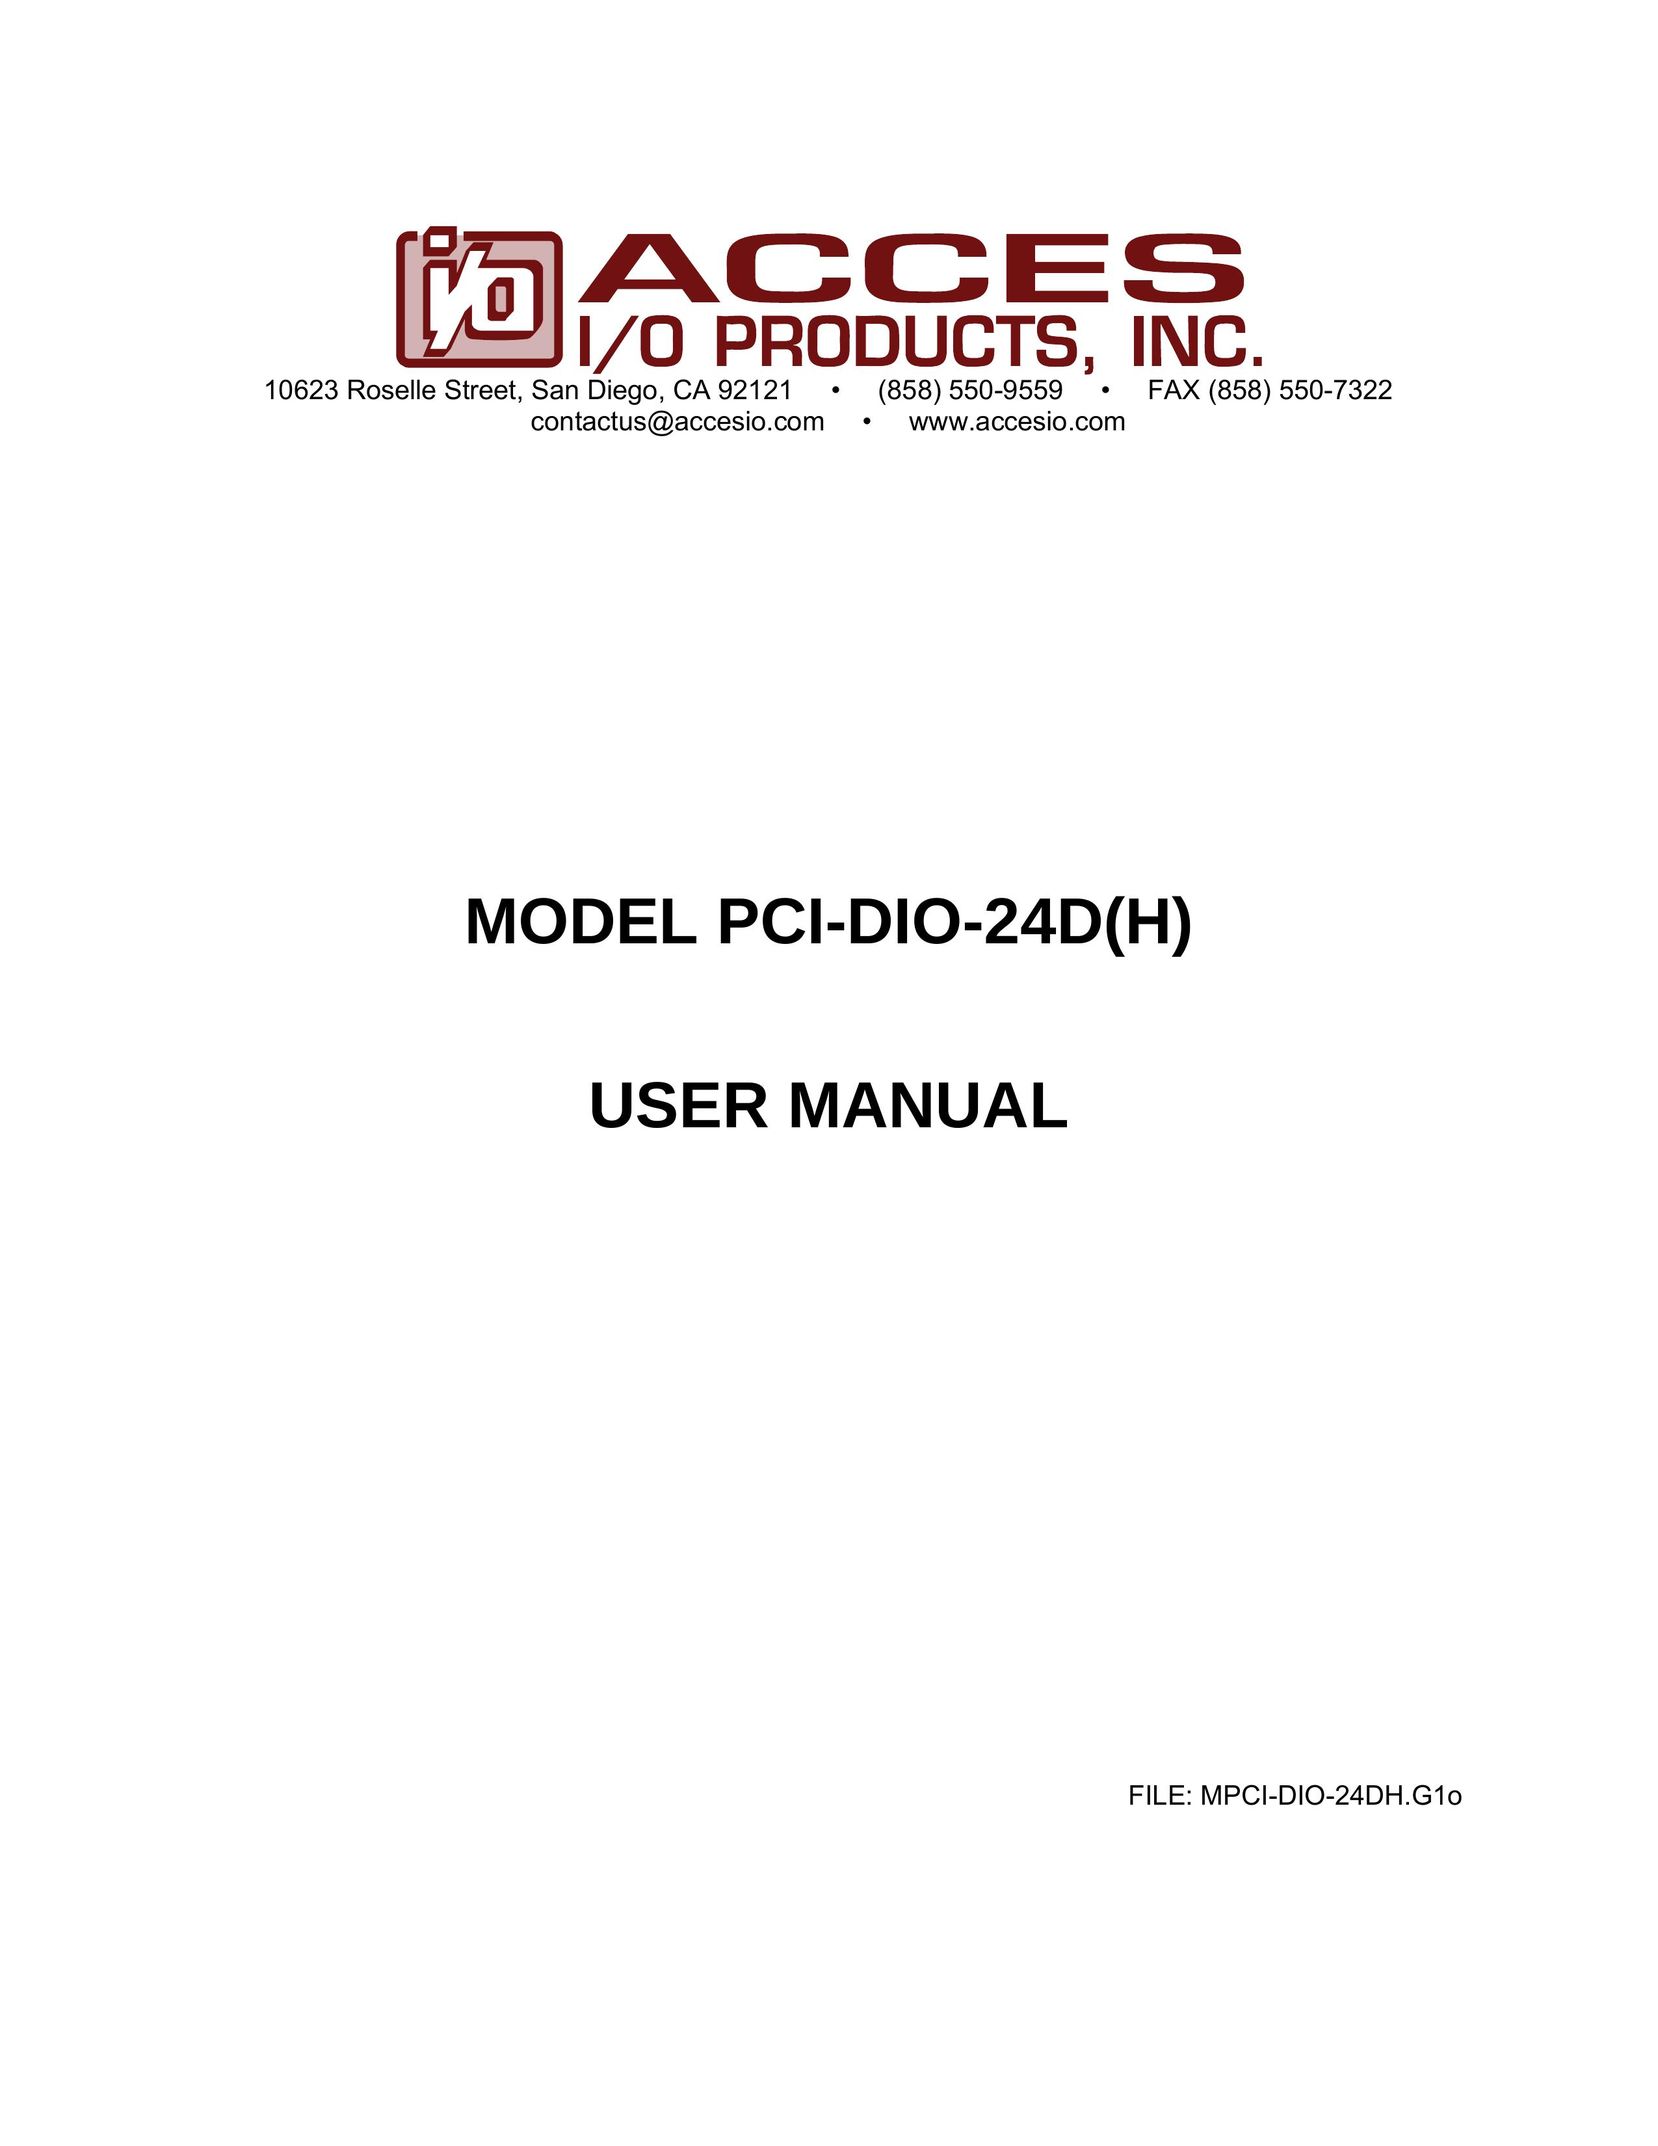 Access PCI-DIO-24D(H) Computer Hardware User Manual